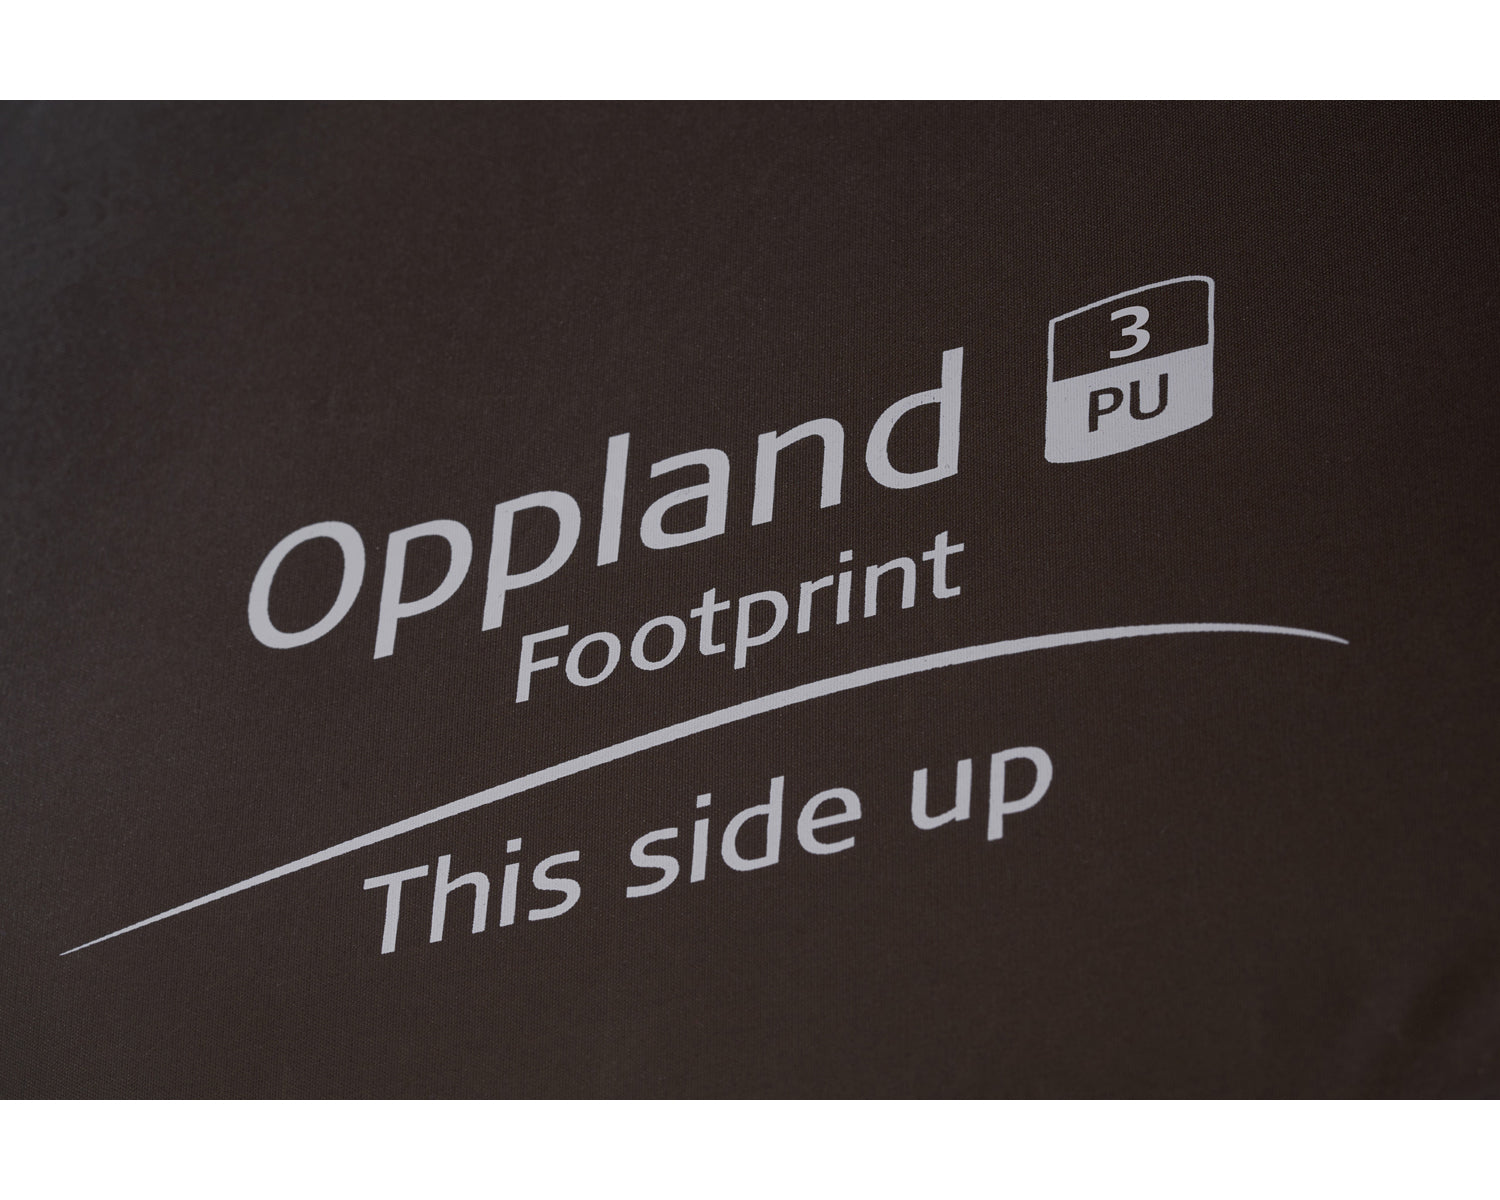 Oppland 3 (2.0) footprint - Demitasse